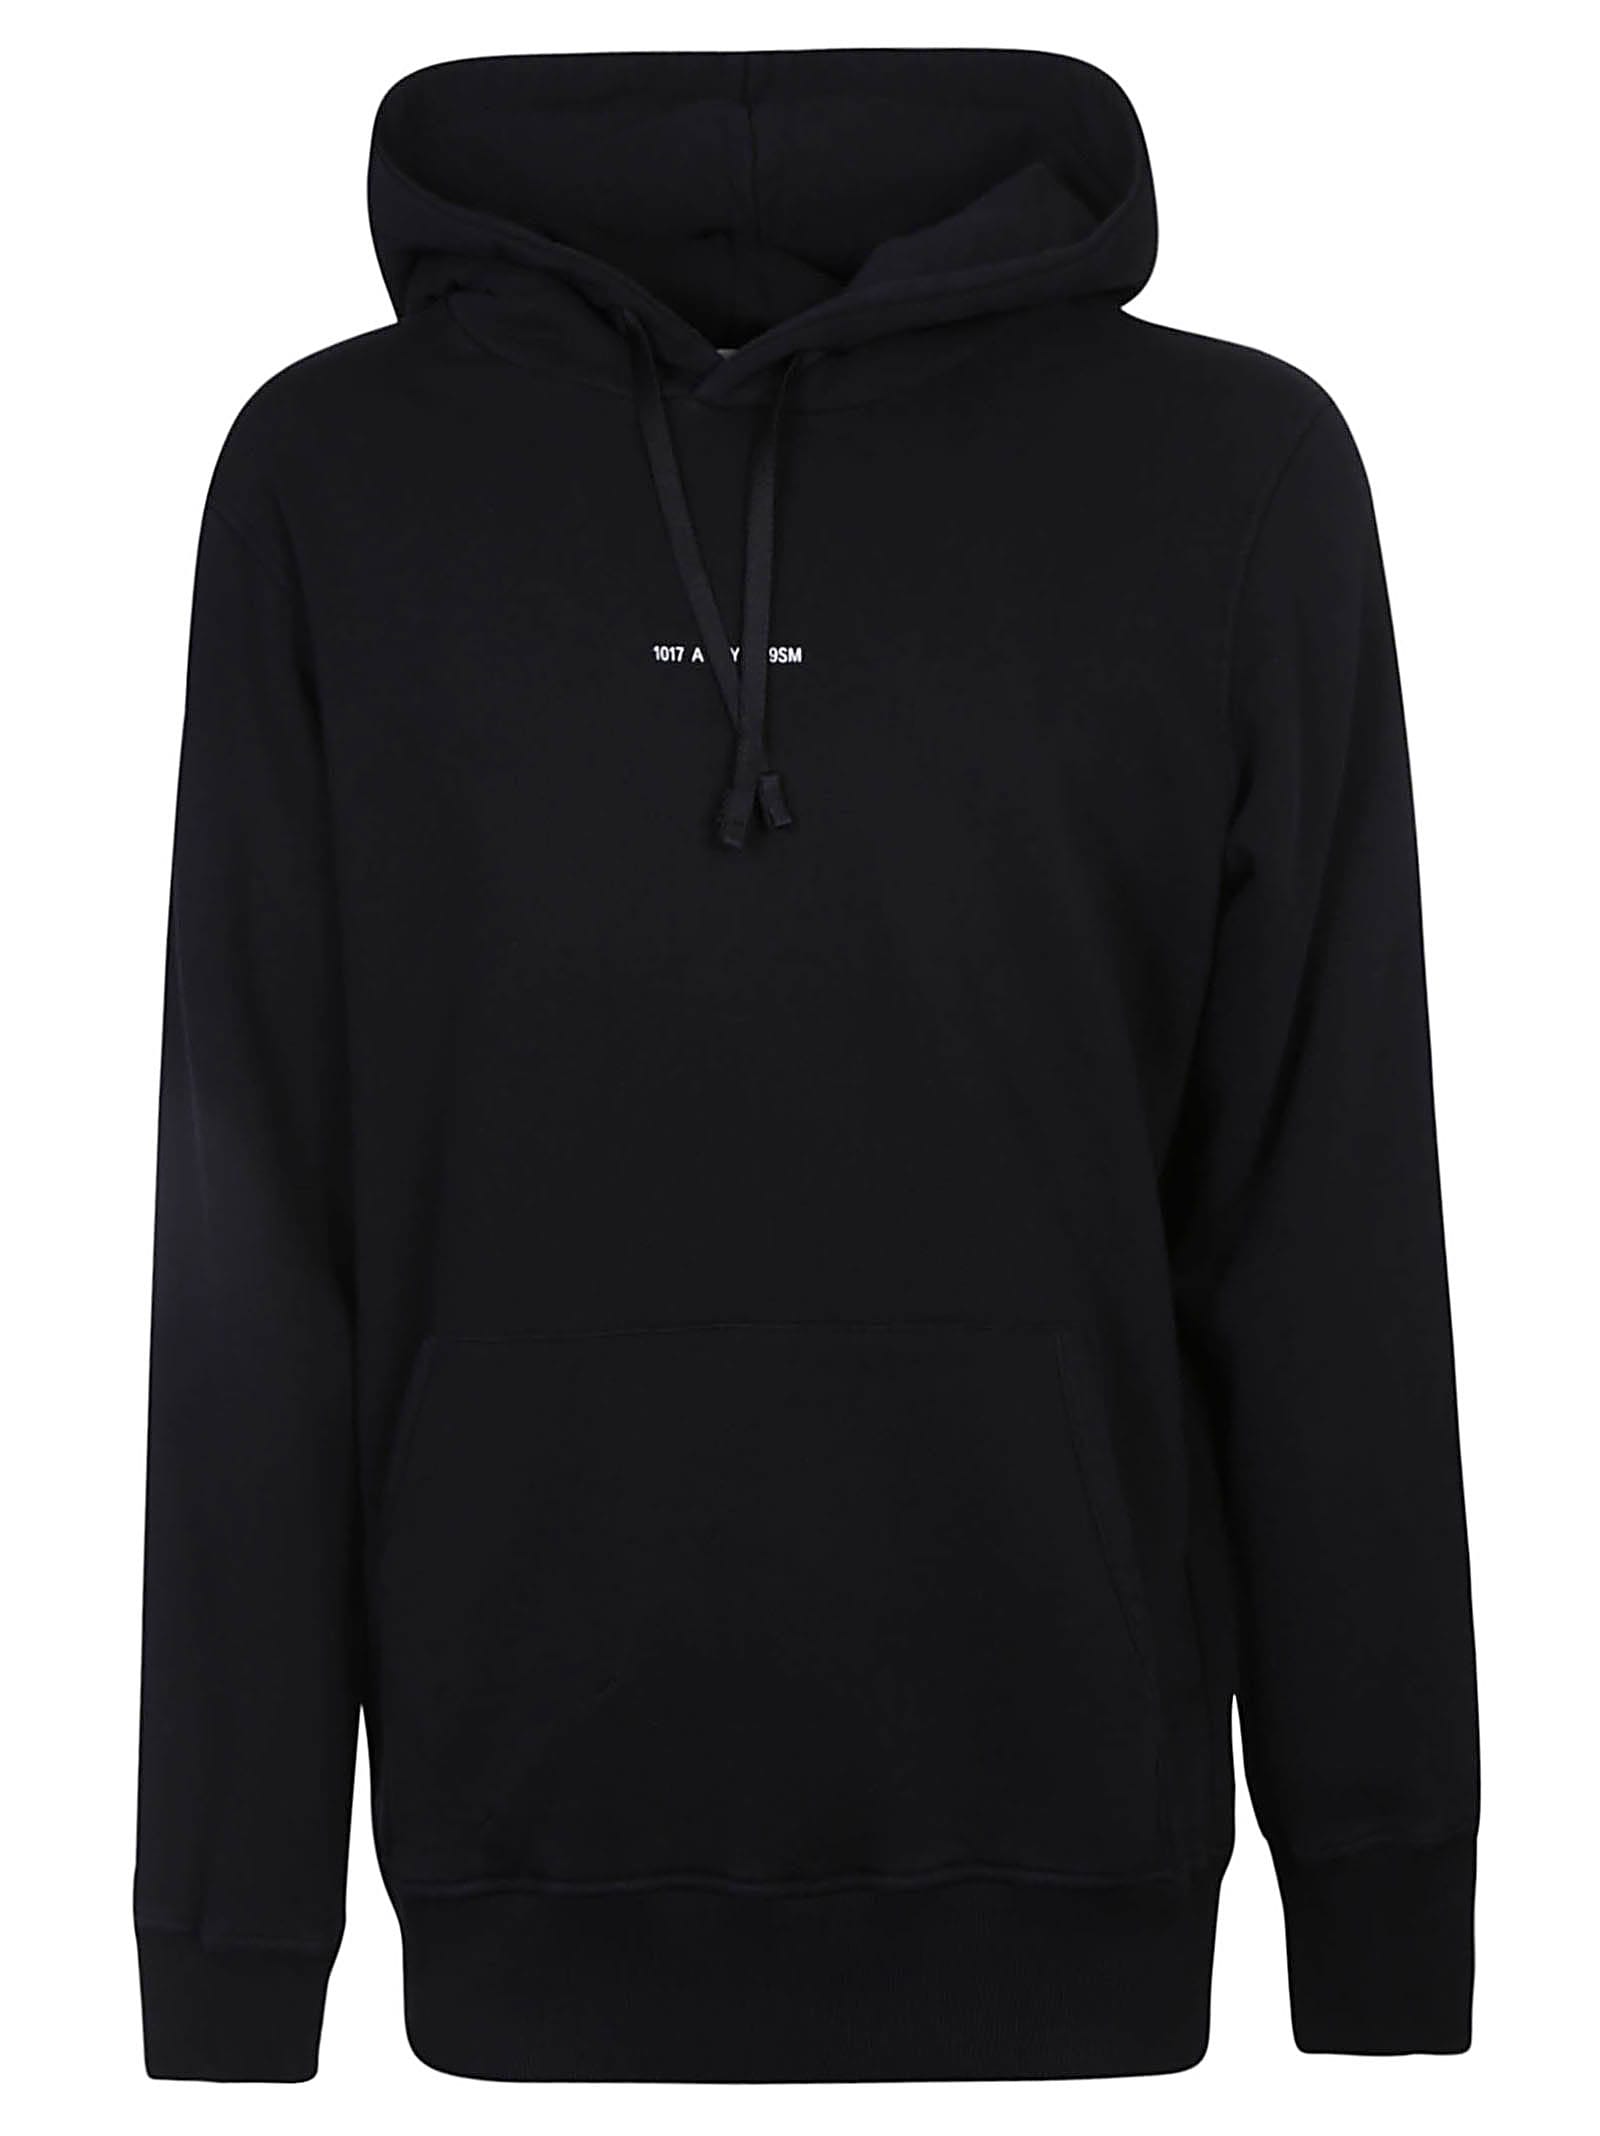 1017 ALYX 9SM Collection Logo Hooded Sweatshirt